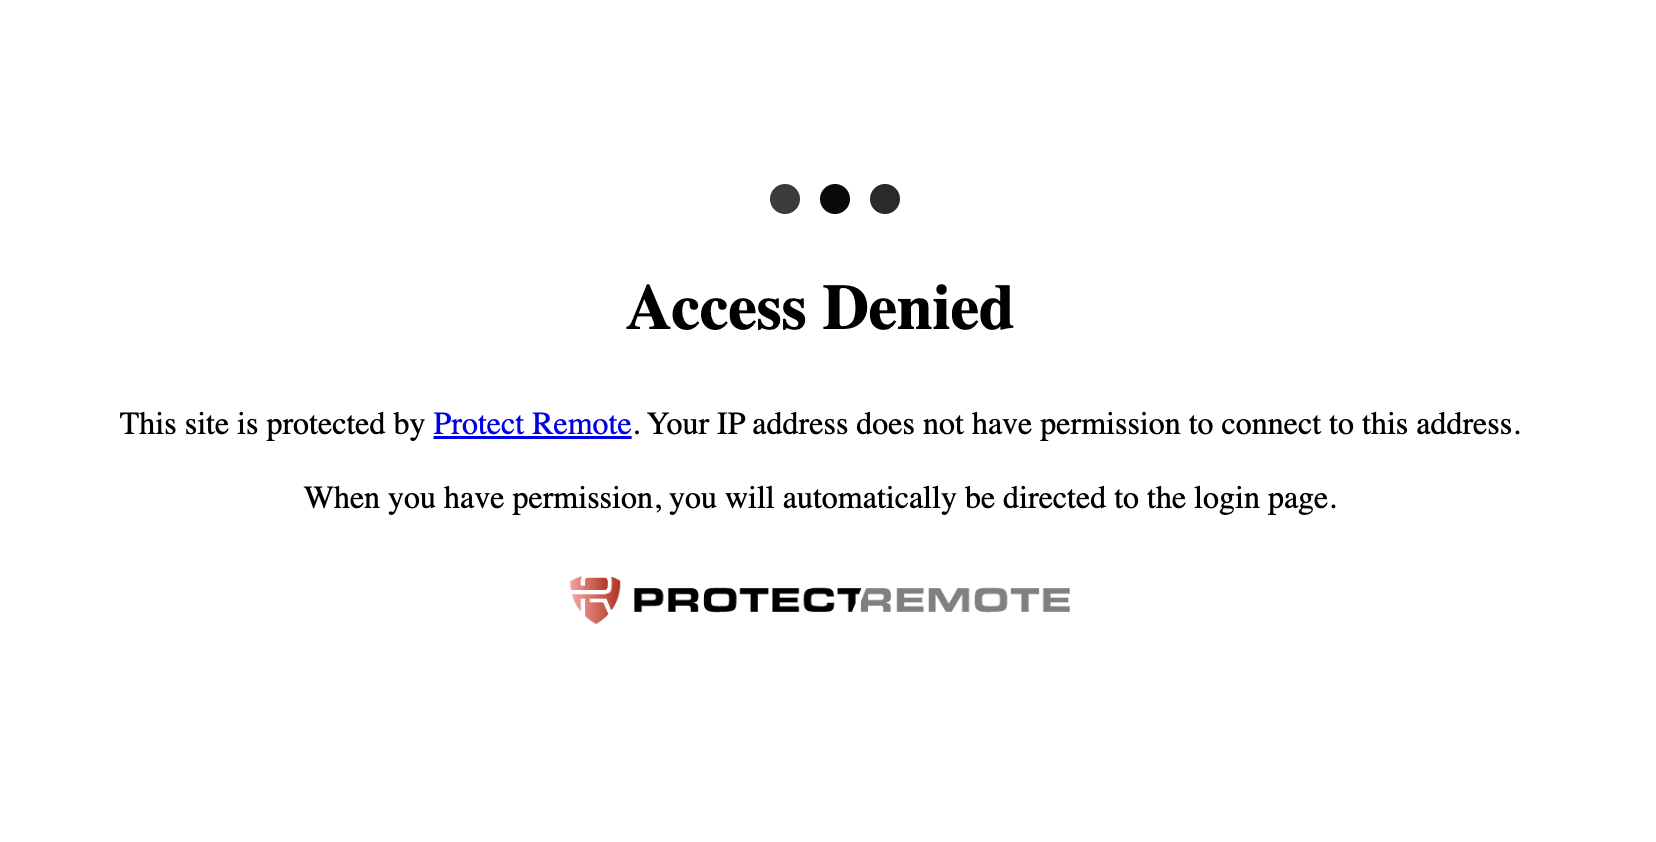 protect remote access denied